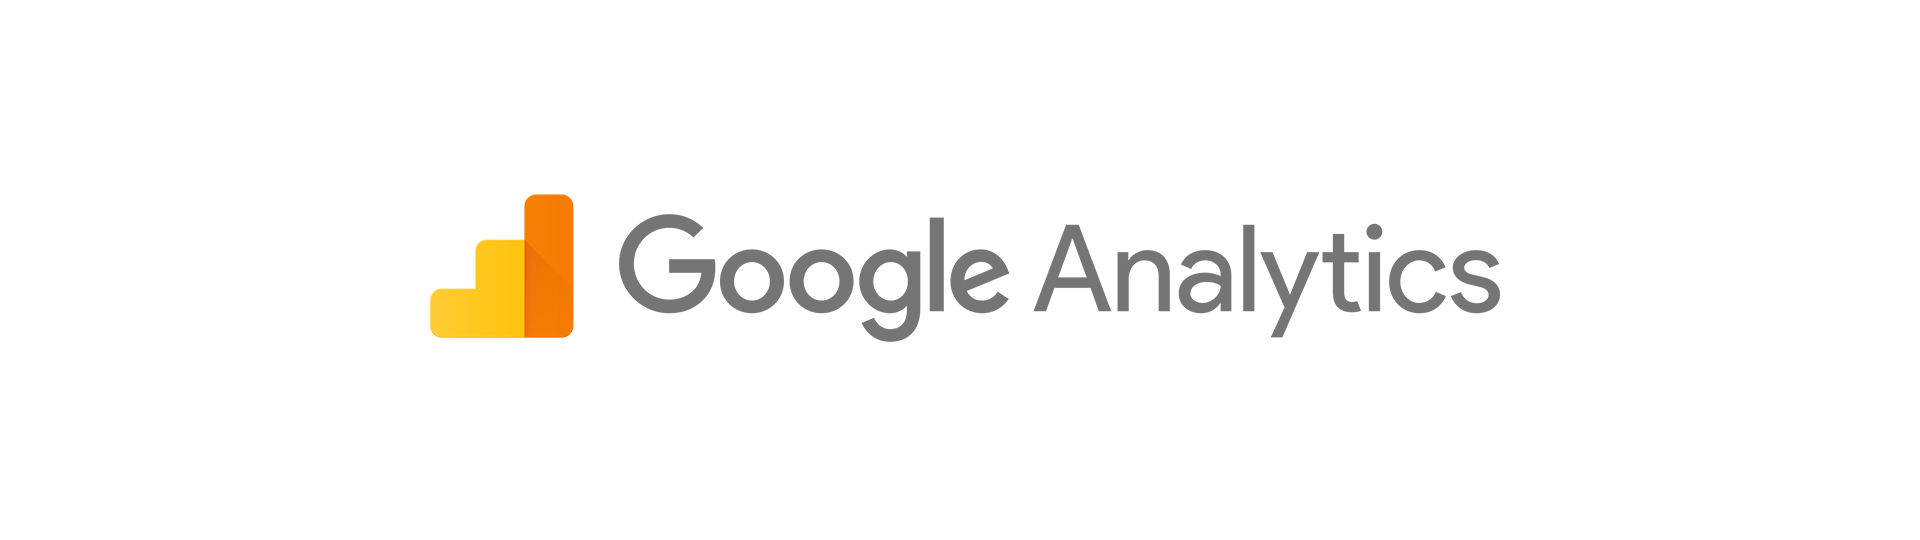 google-analytics-site.png